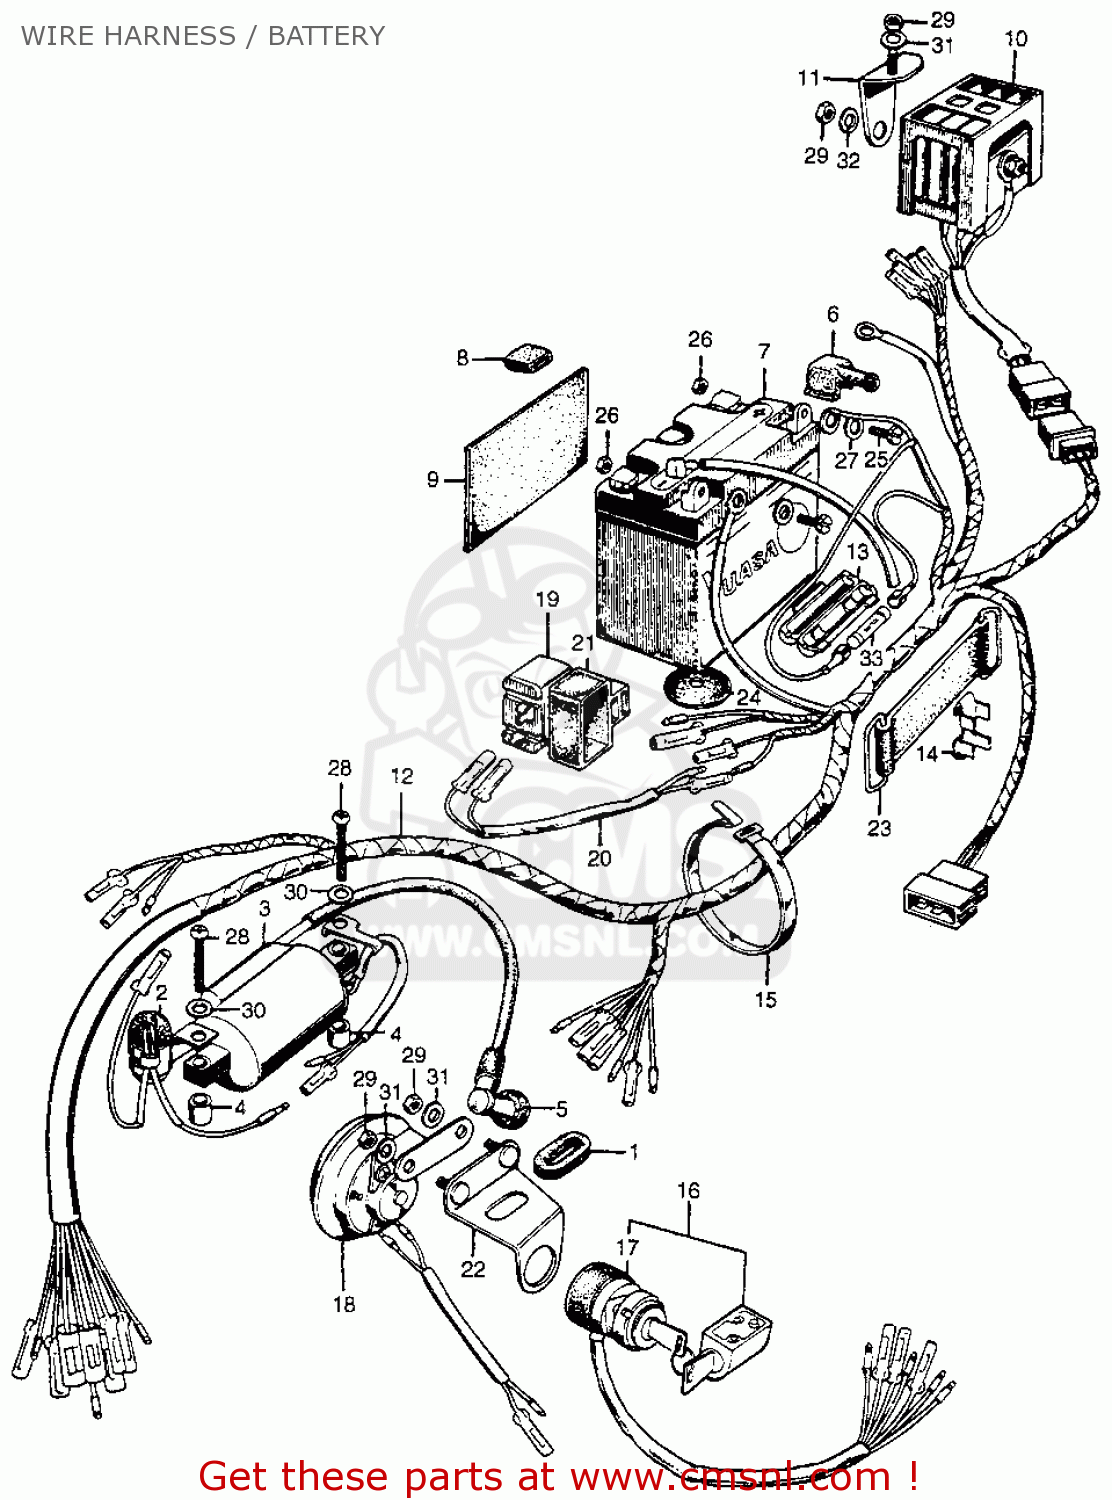 Honda CL100 SCRAMBLER 1971 K1 USA WIRE HARNESS / BATTERY ... e bike wiring diagram 